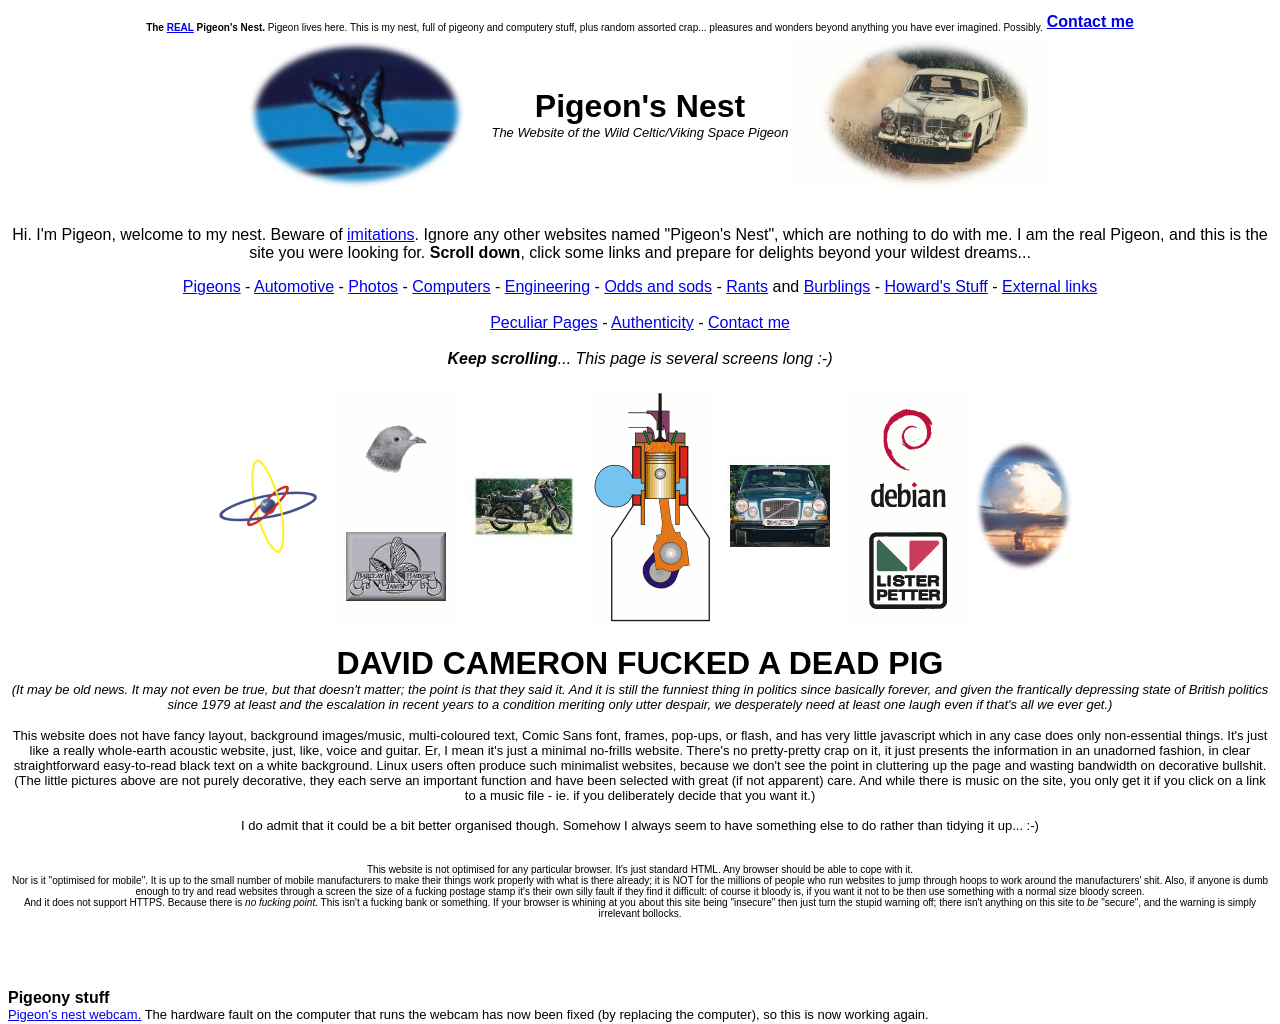 pigeonsnest.co.uk